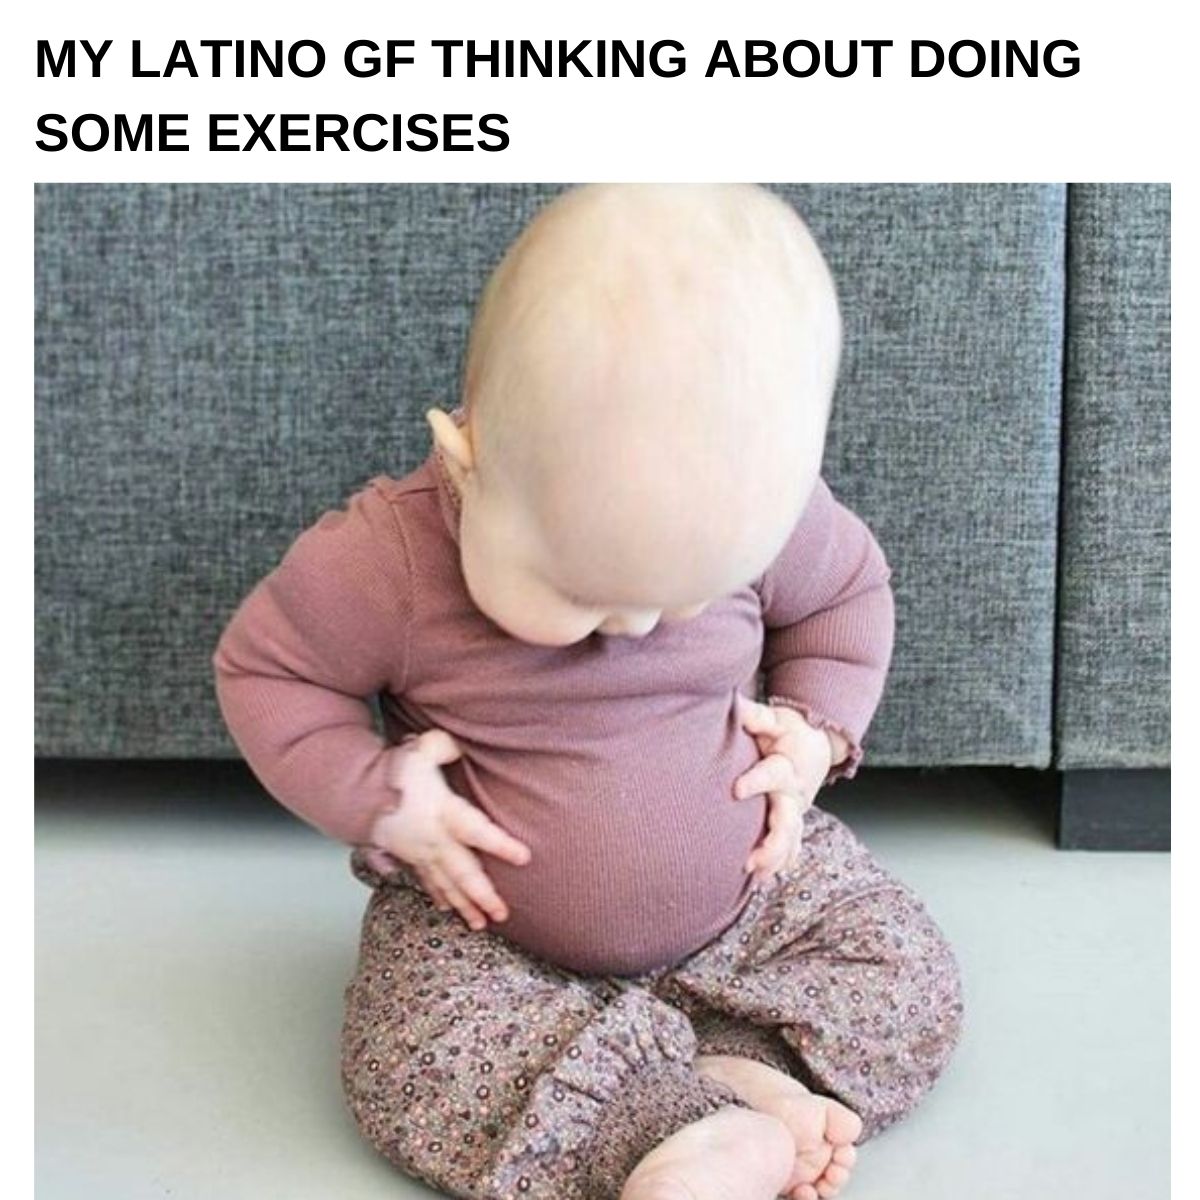 Latino Girlfriend meme on baby looking at tummy